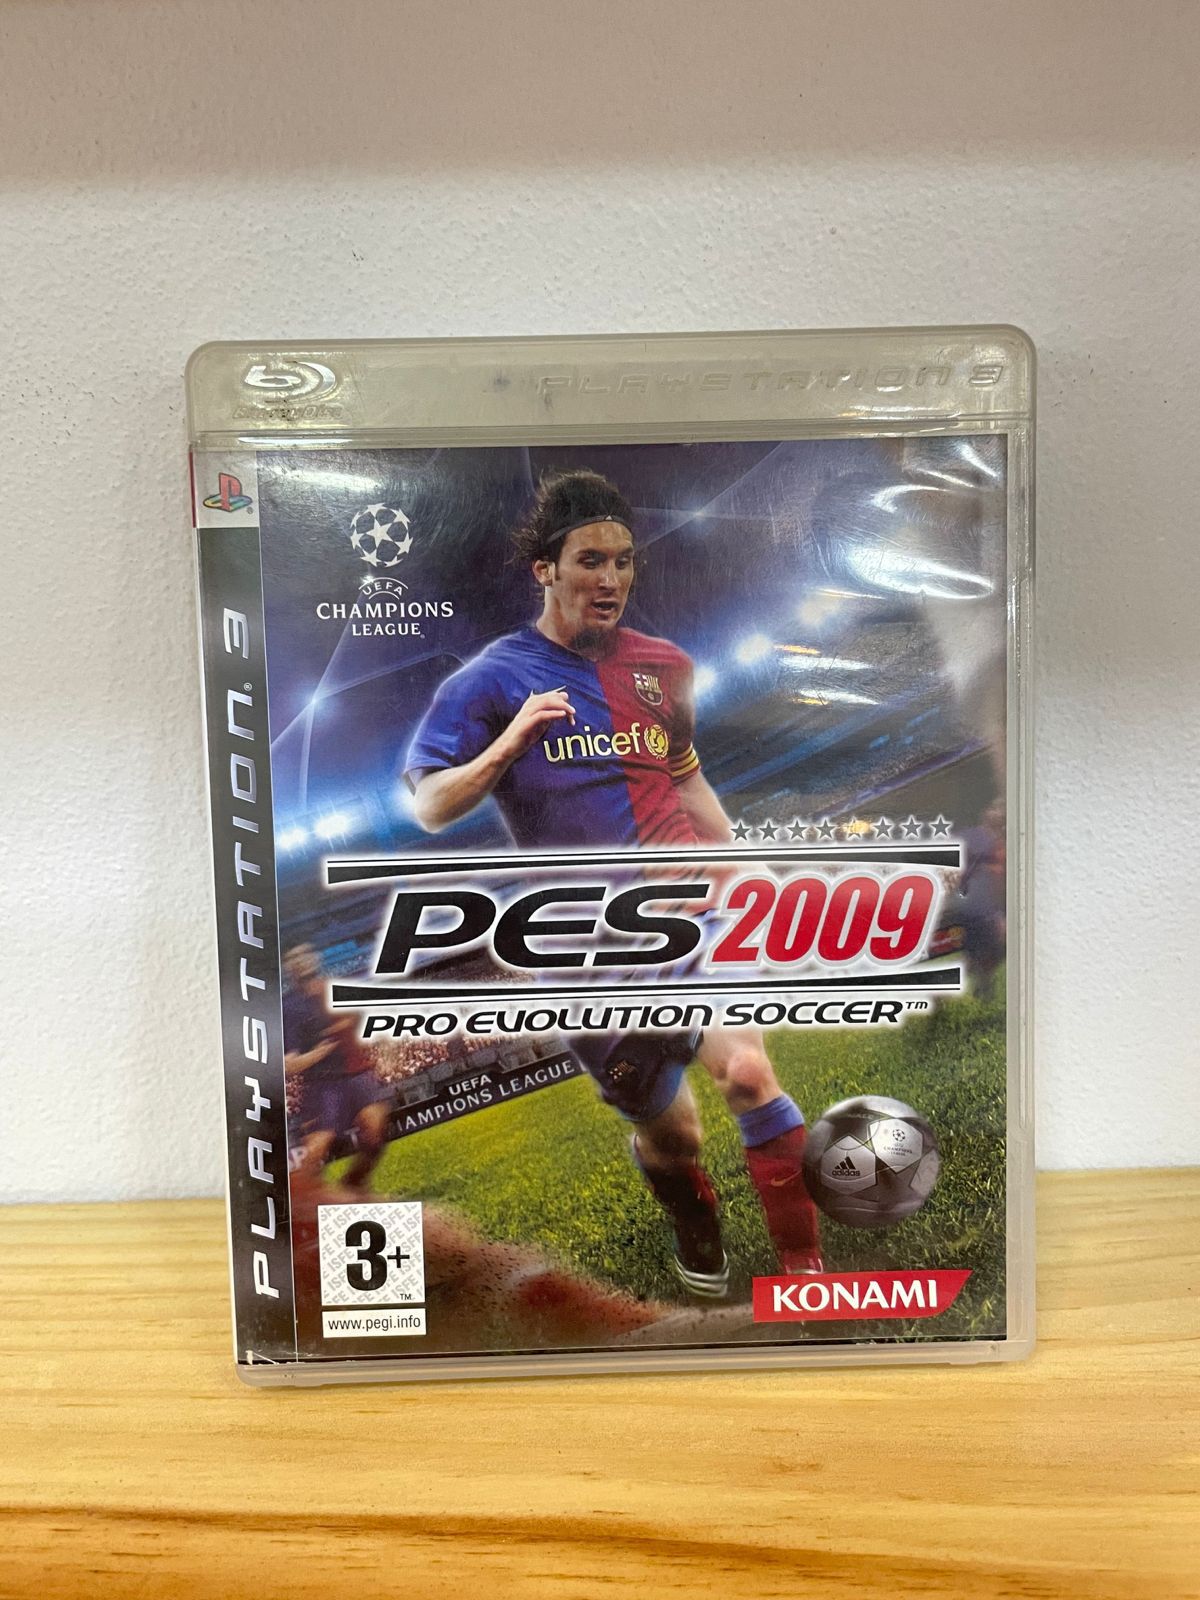 Pes 2012 original para playstation 3 PS3 - mídia física